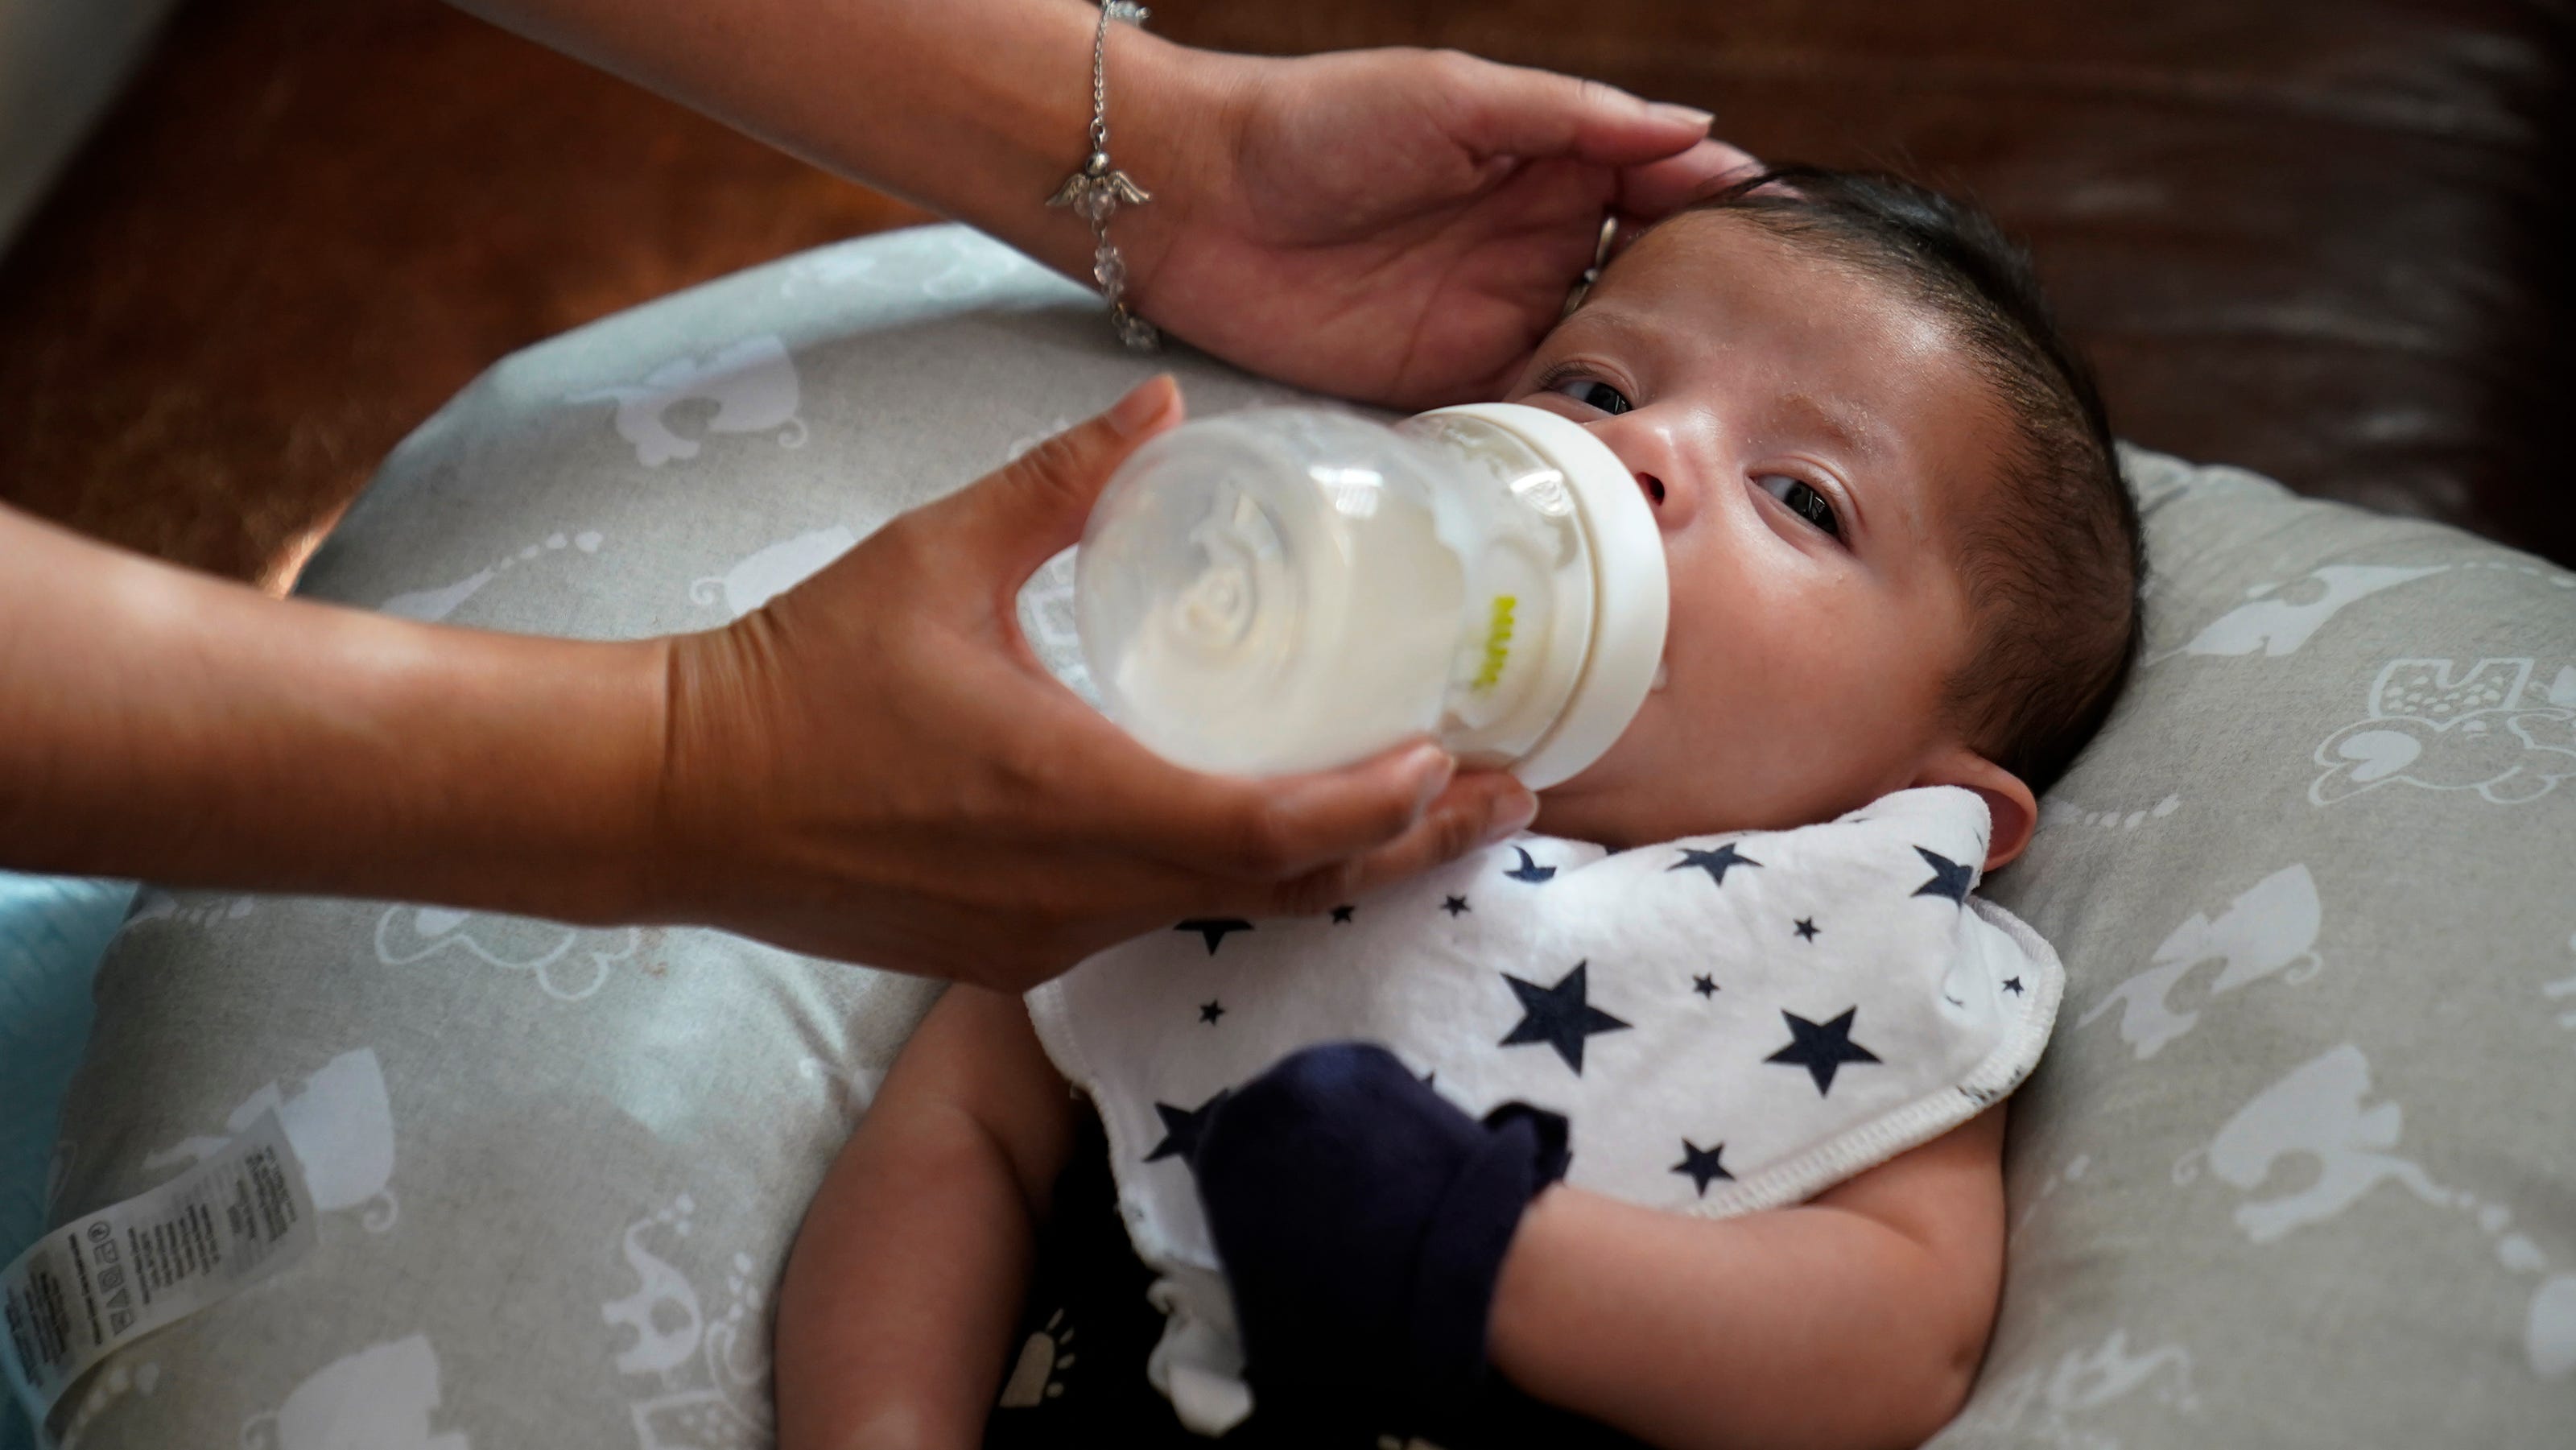 Infant formula shortage spurs federal response but relief weeks away